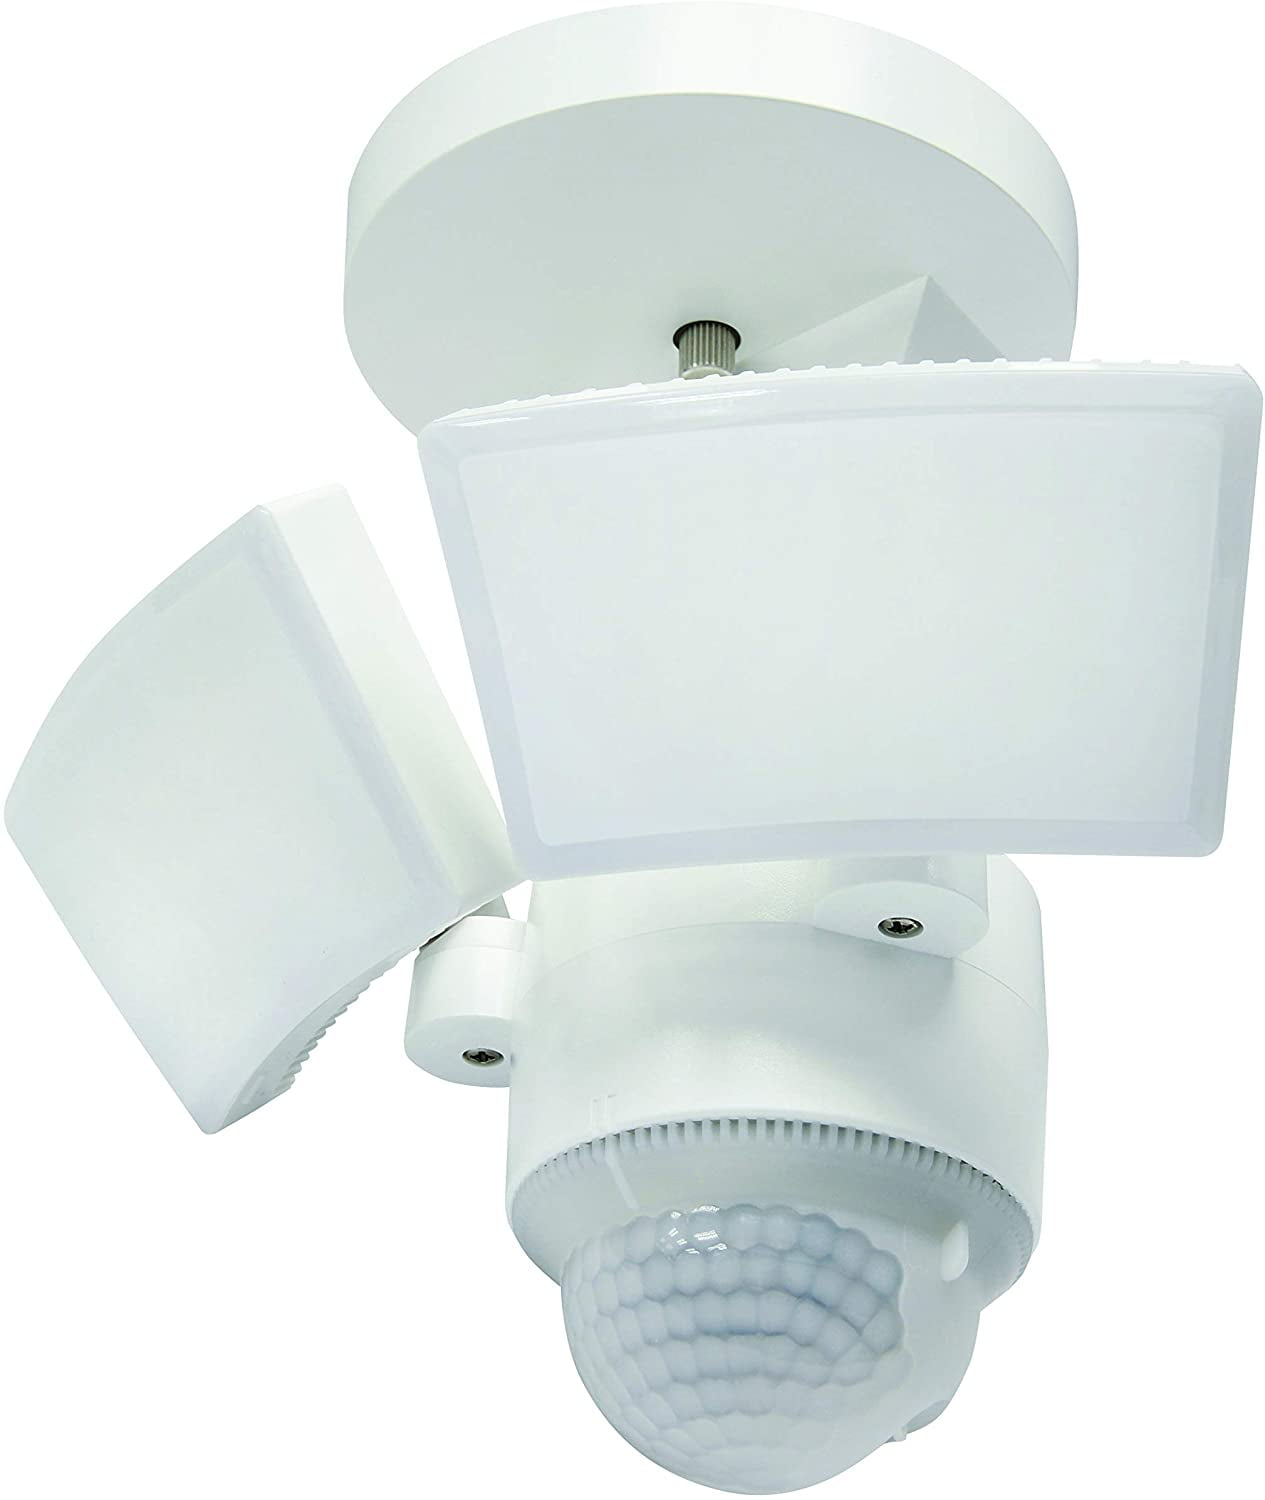 American Security LED Light Kit HIWL120 3115046